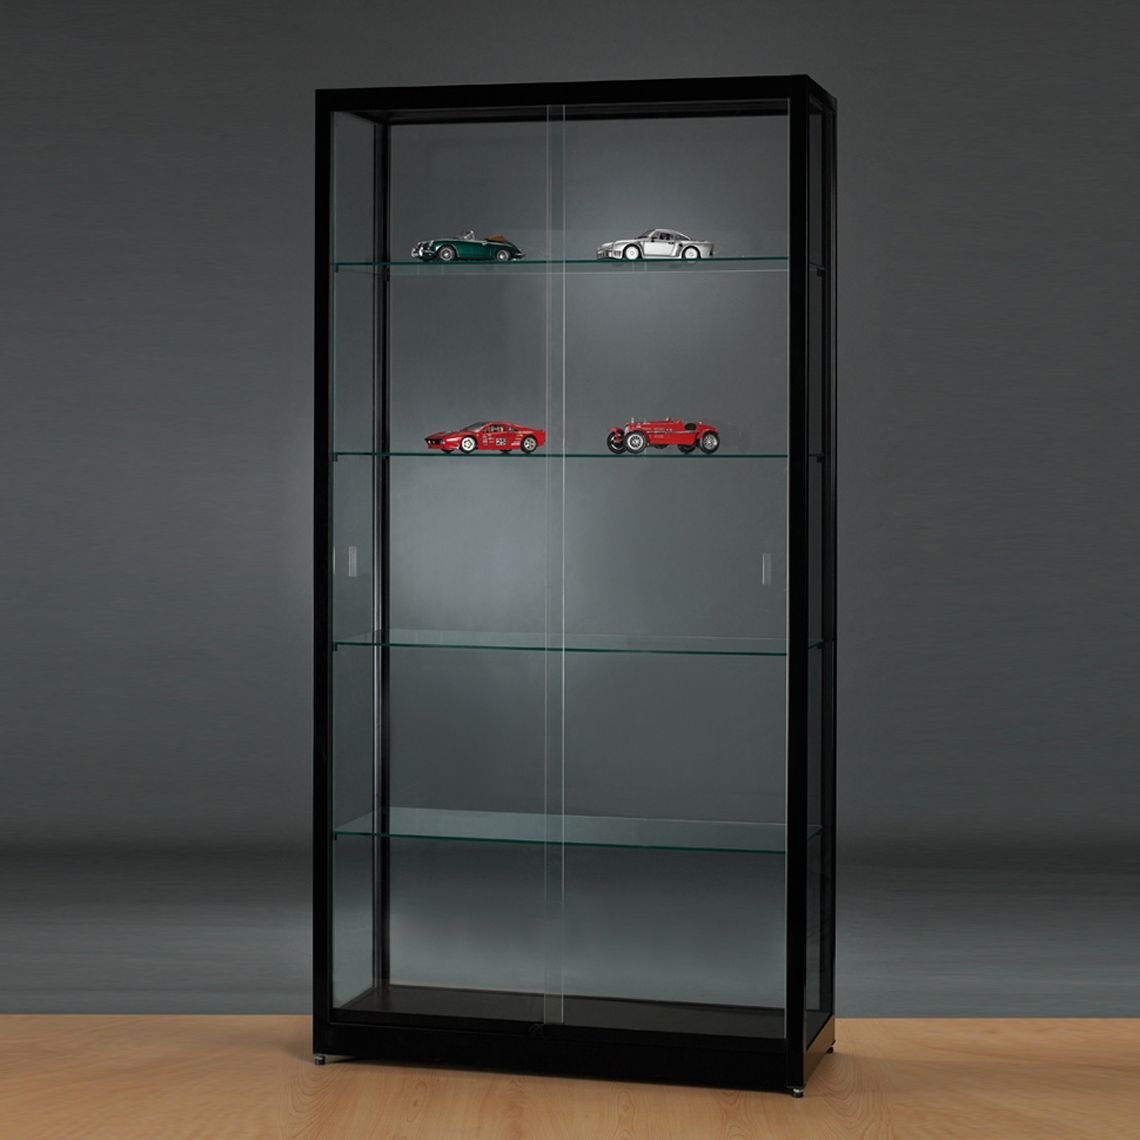 Зеркало витрина. Шкаф-витрина Modern b820. Витрина Glass Showcase. Книжный шкаф Glass Cabinet. SS 603 стеклянная витрина.